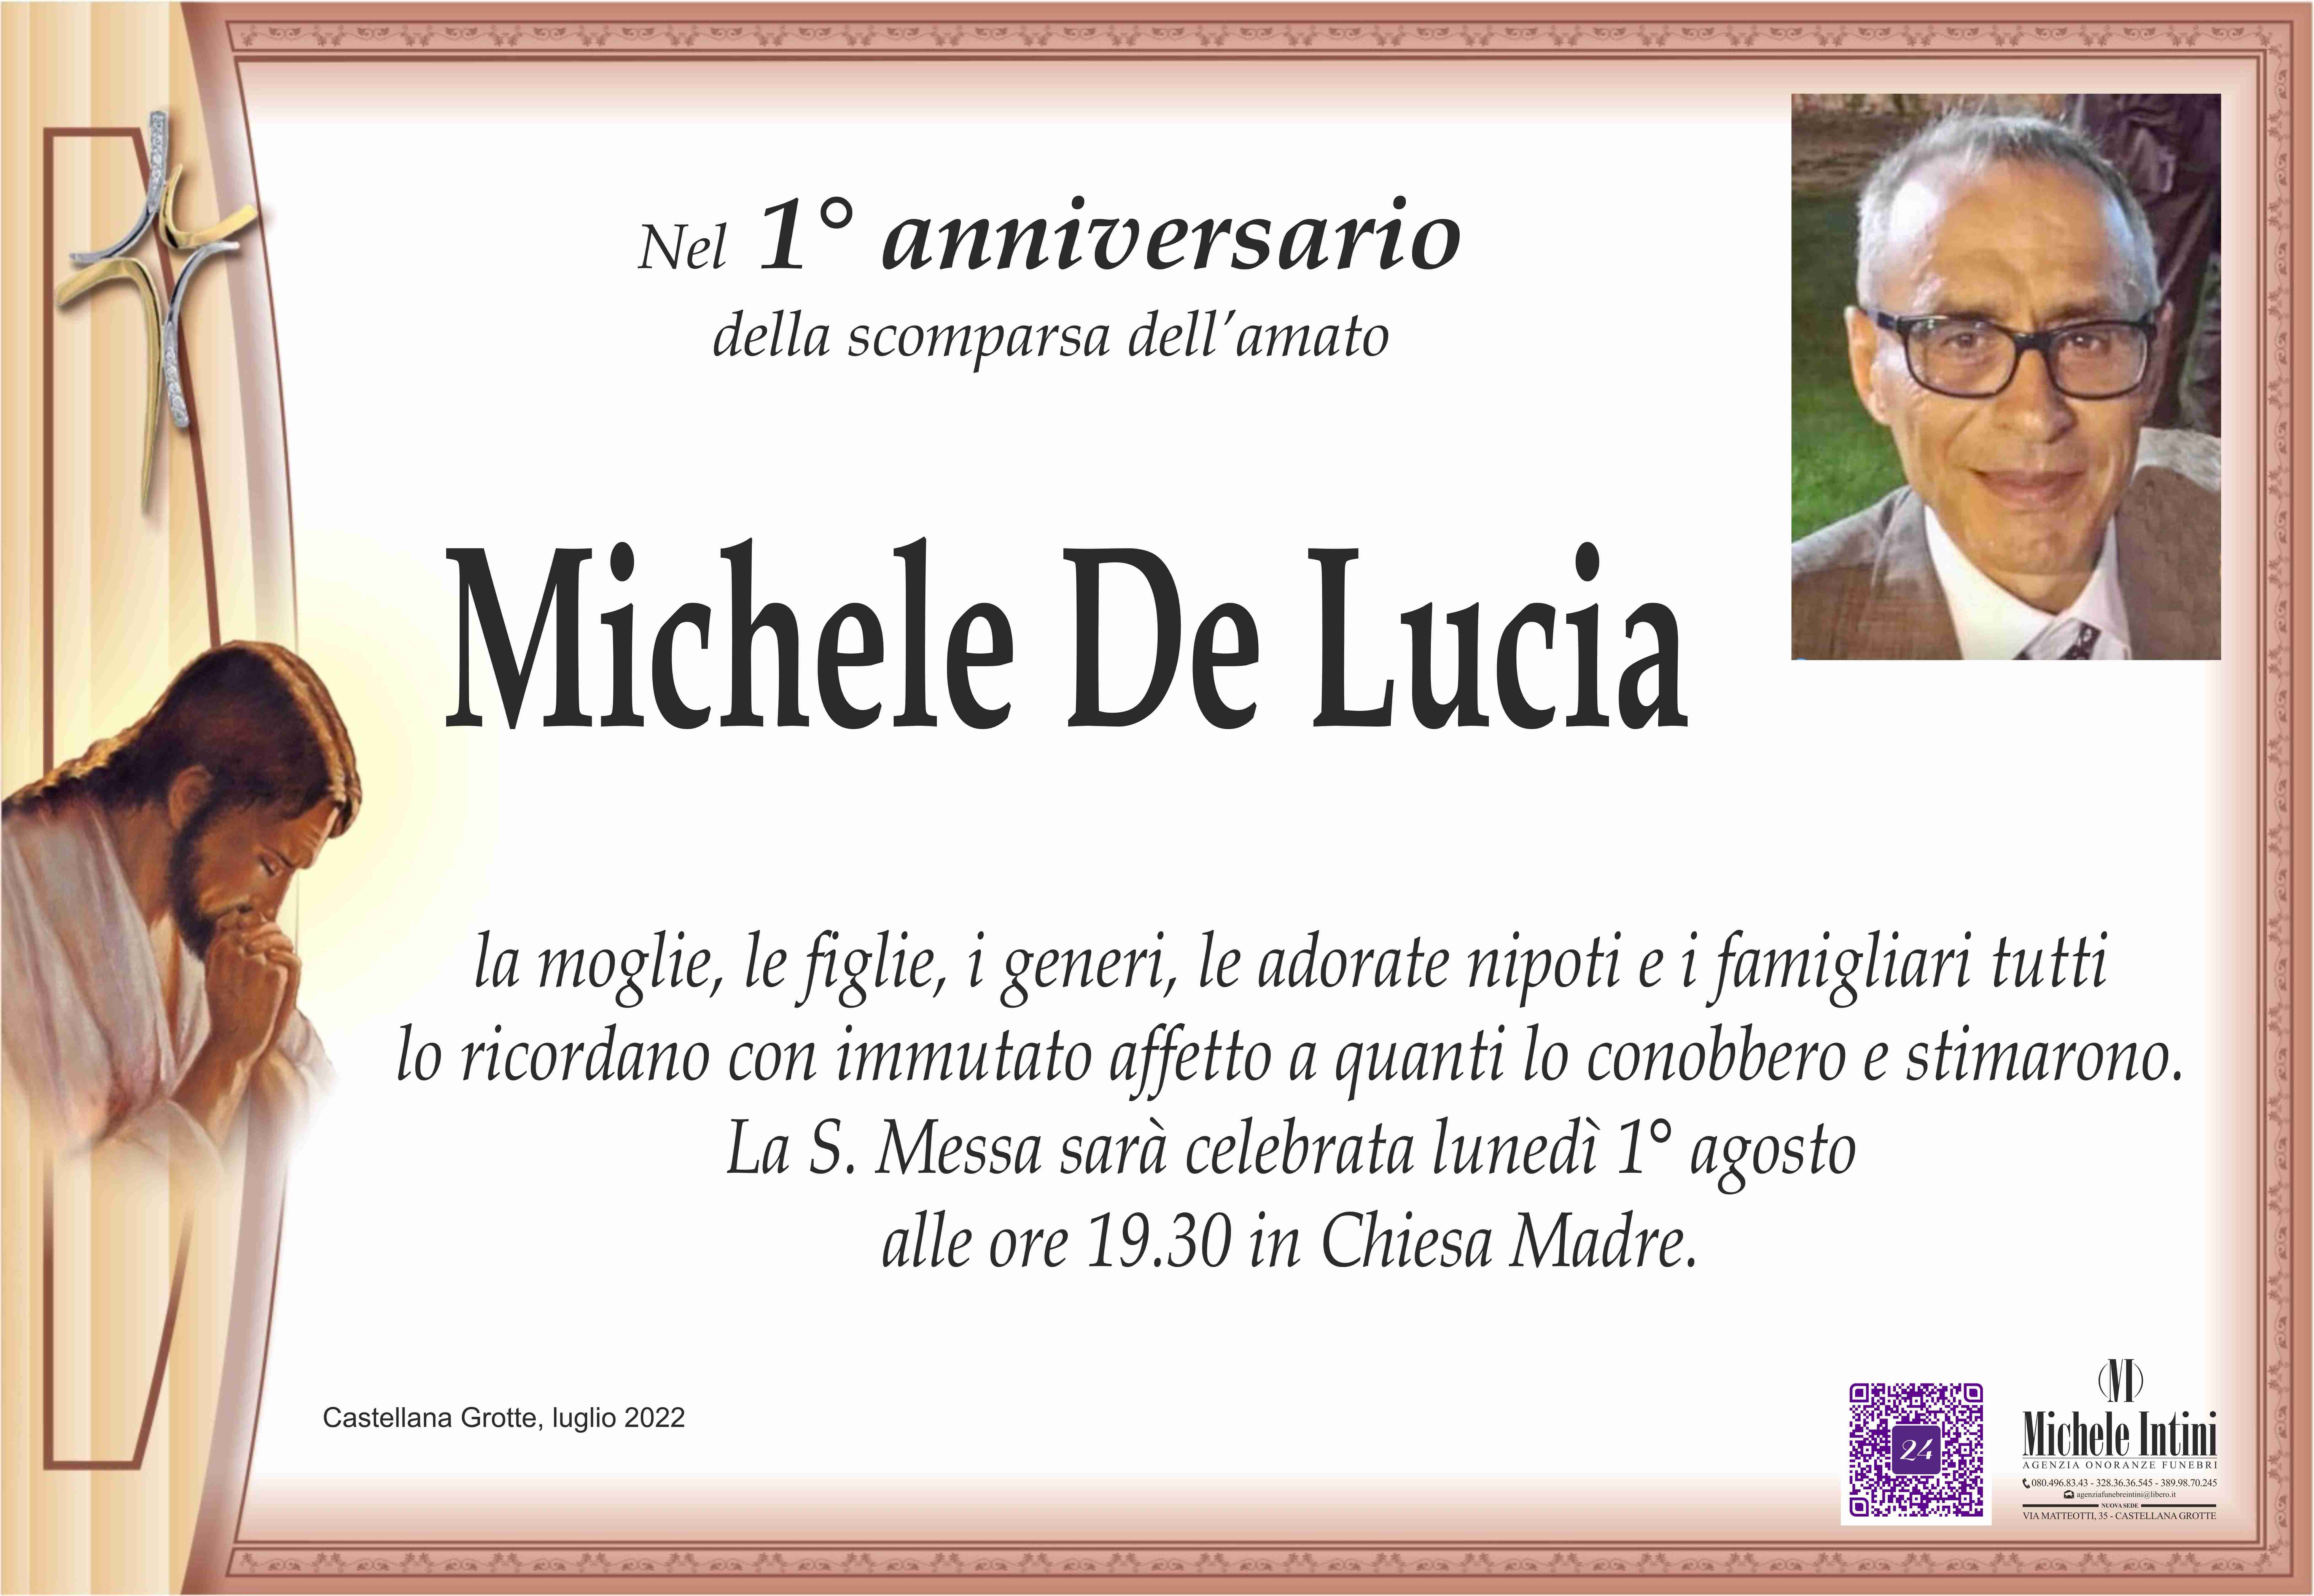 Michele De Lucia